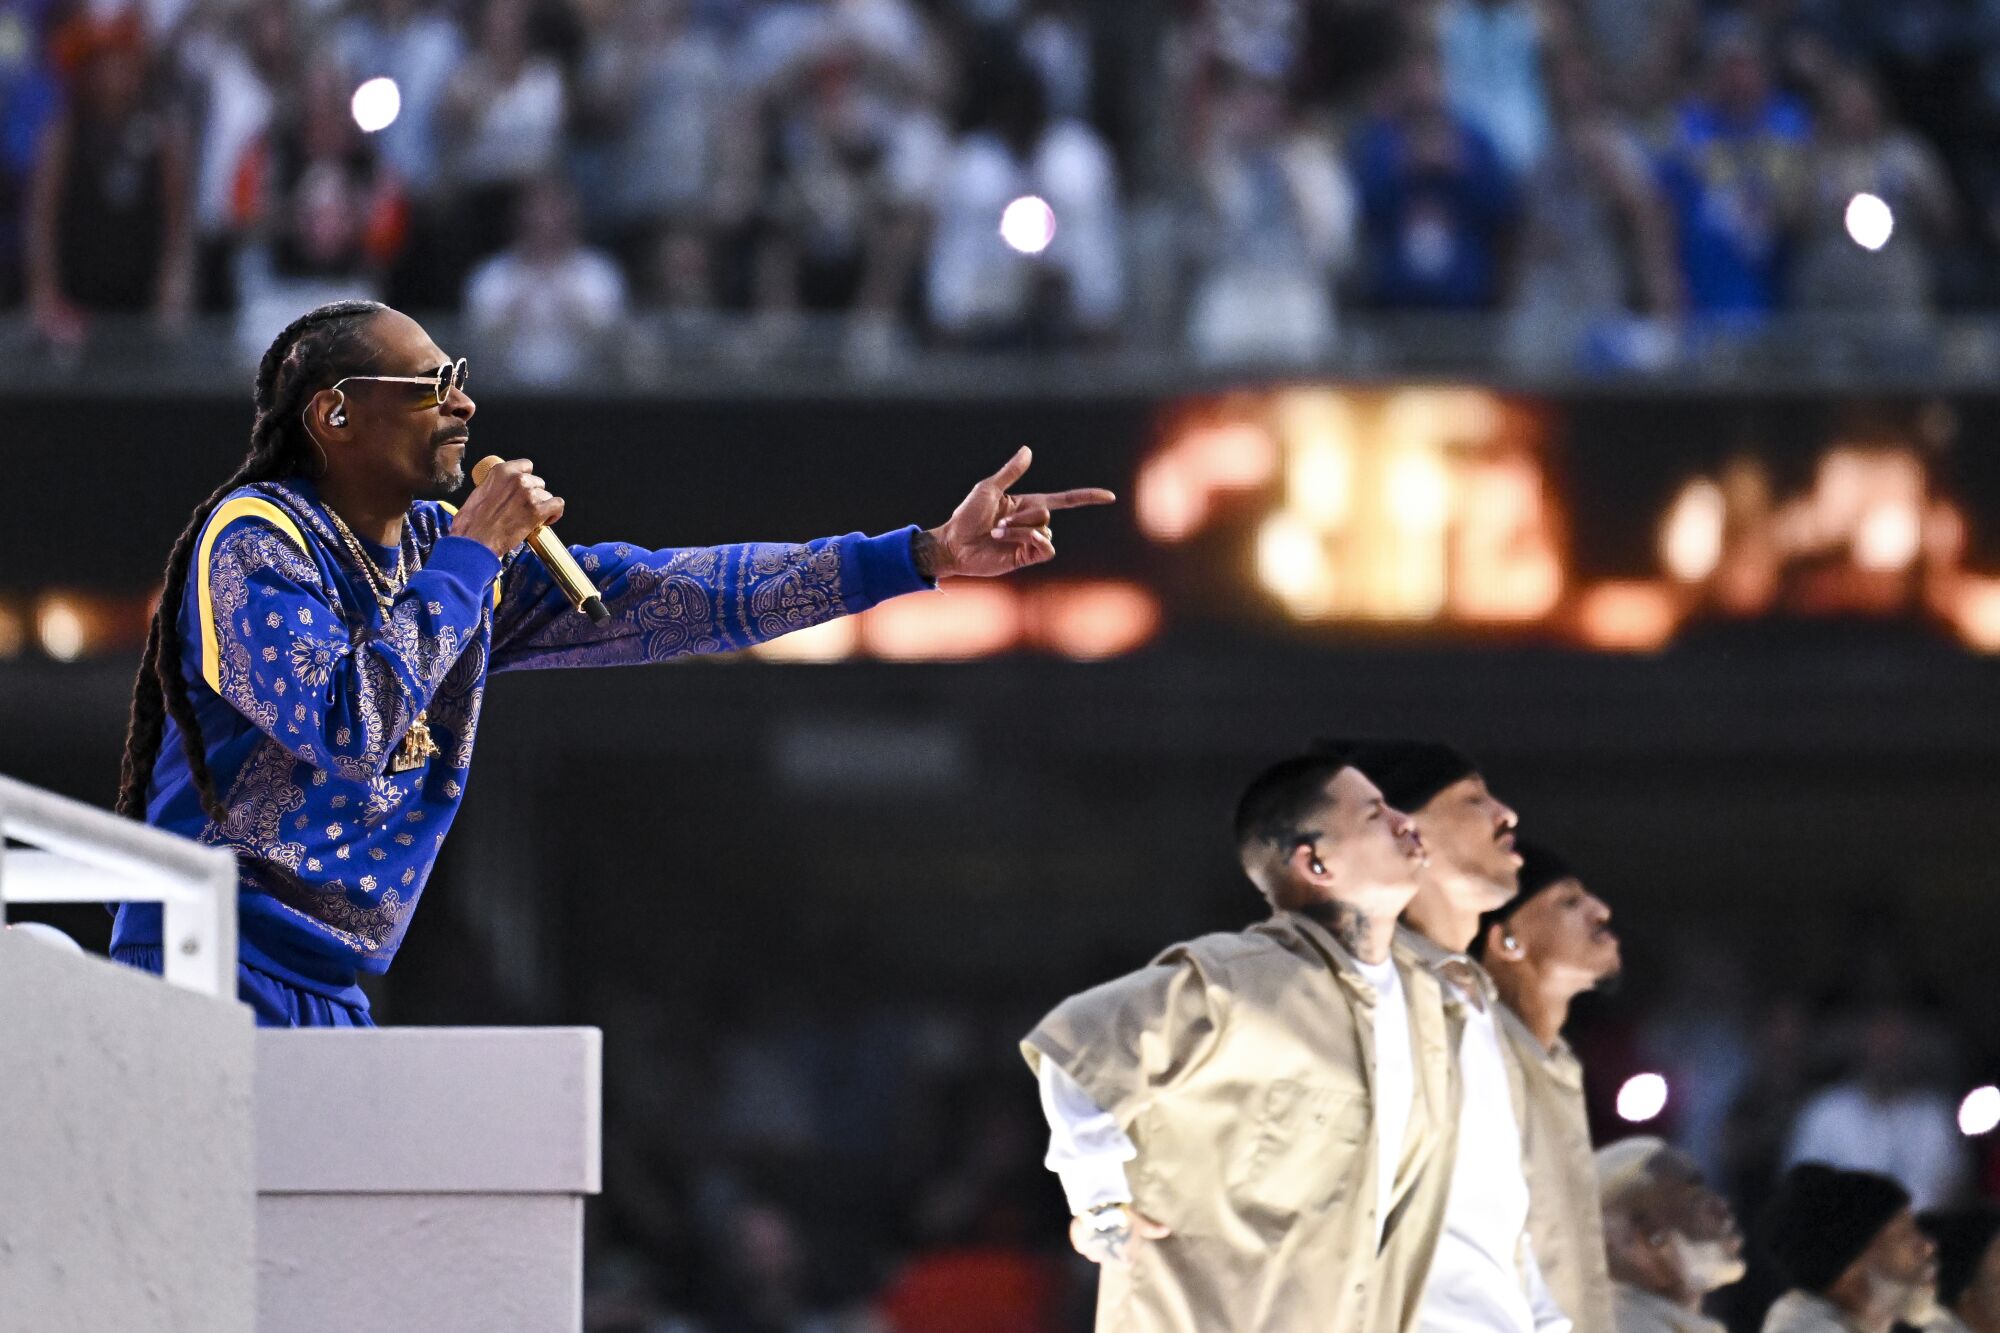 Snoop Dogg performs during halftime in Super Bowl LVI.